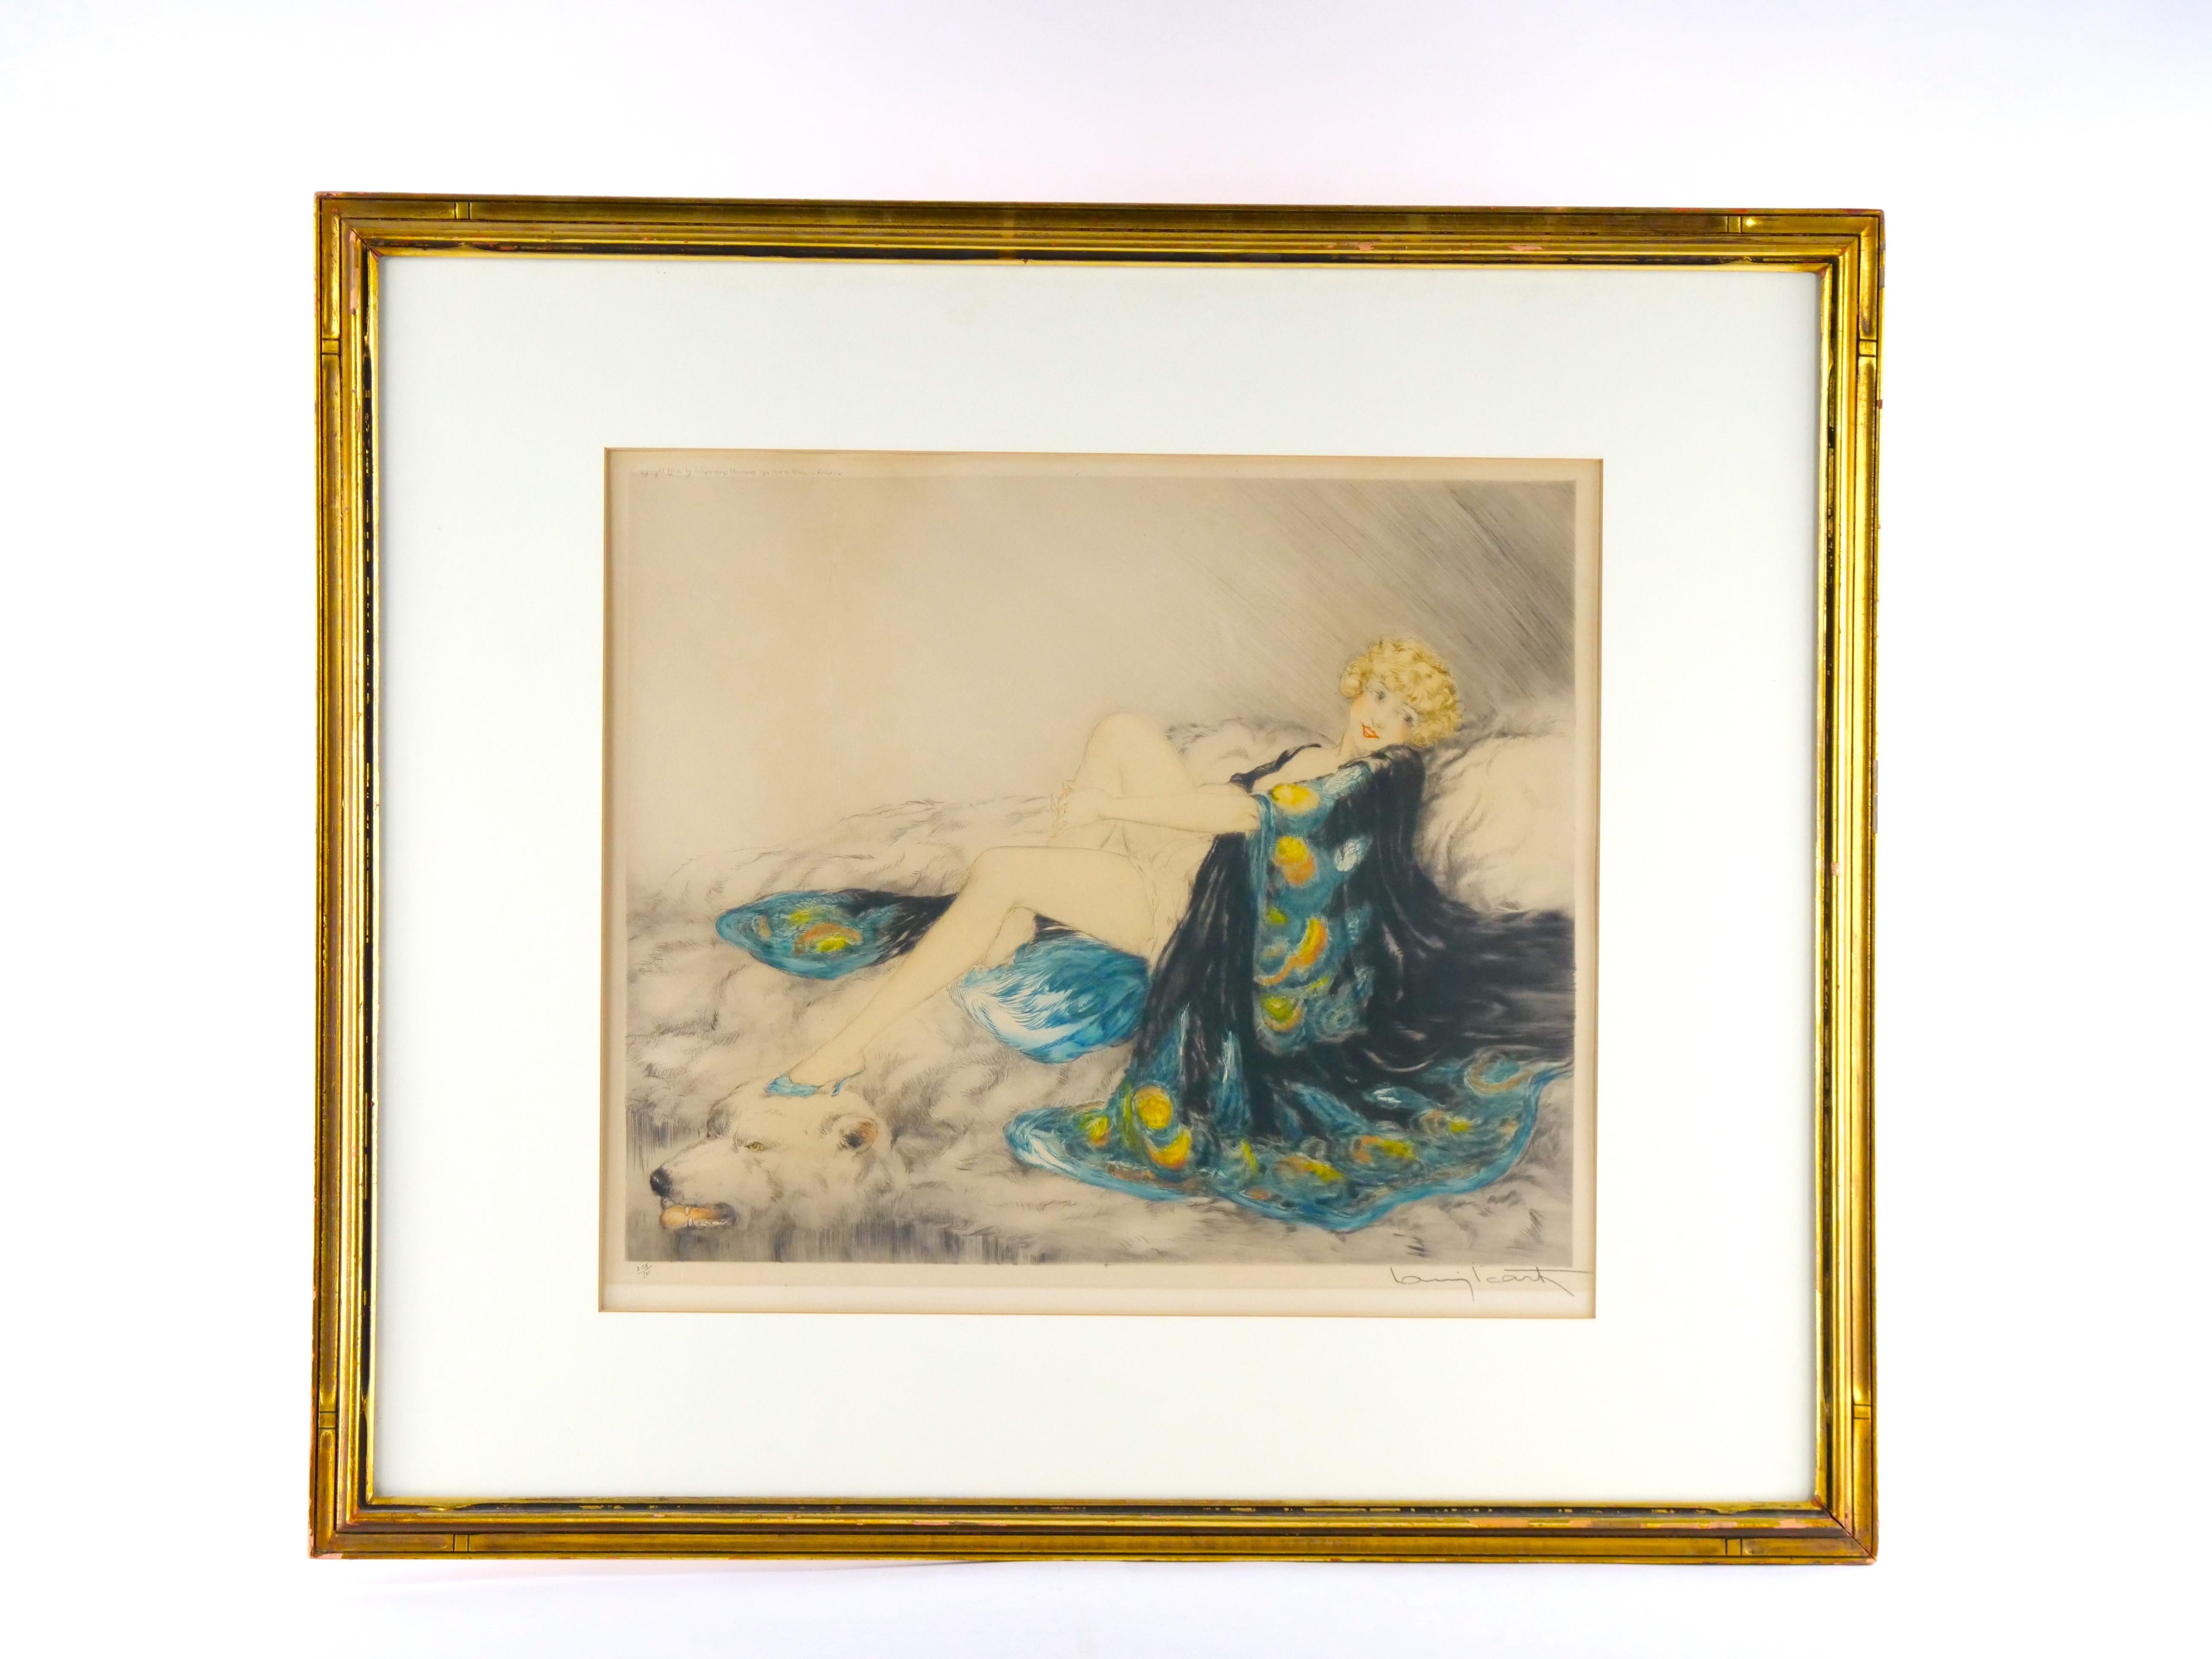 Louis Icart Framed Etching of Female Beauty in Peacock Lingerie on Bearskin 1926 For Sale 5